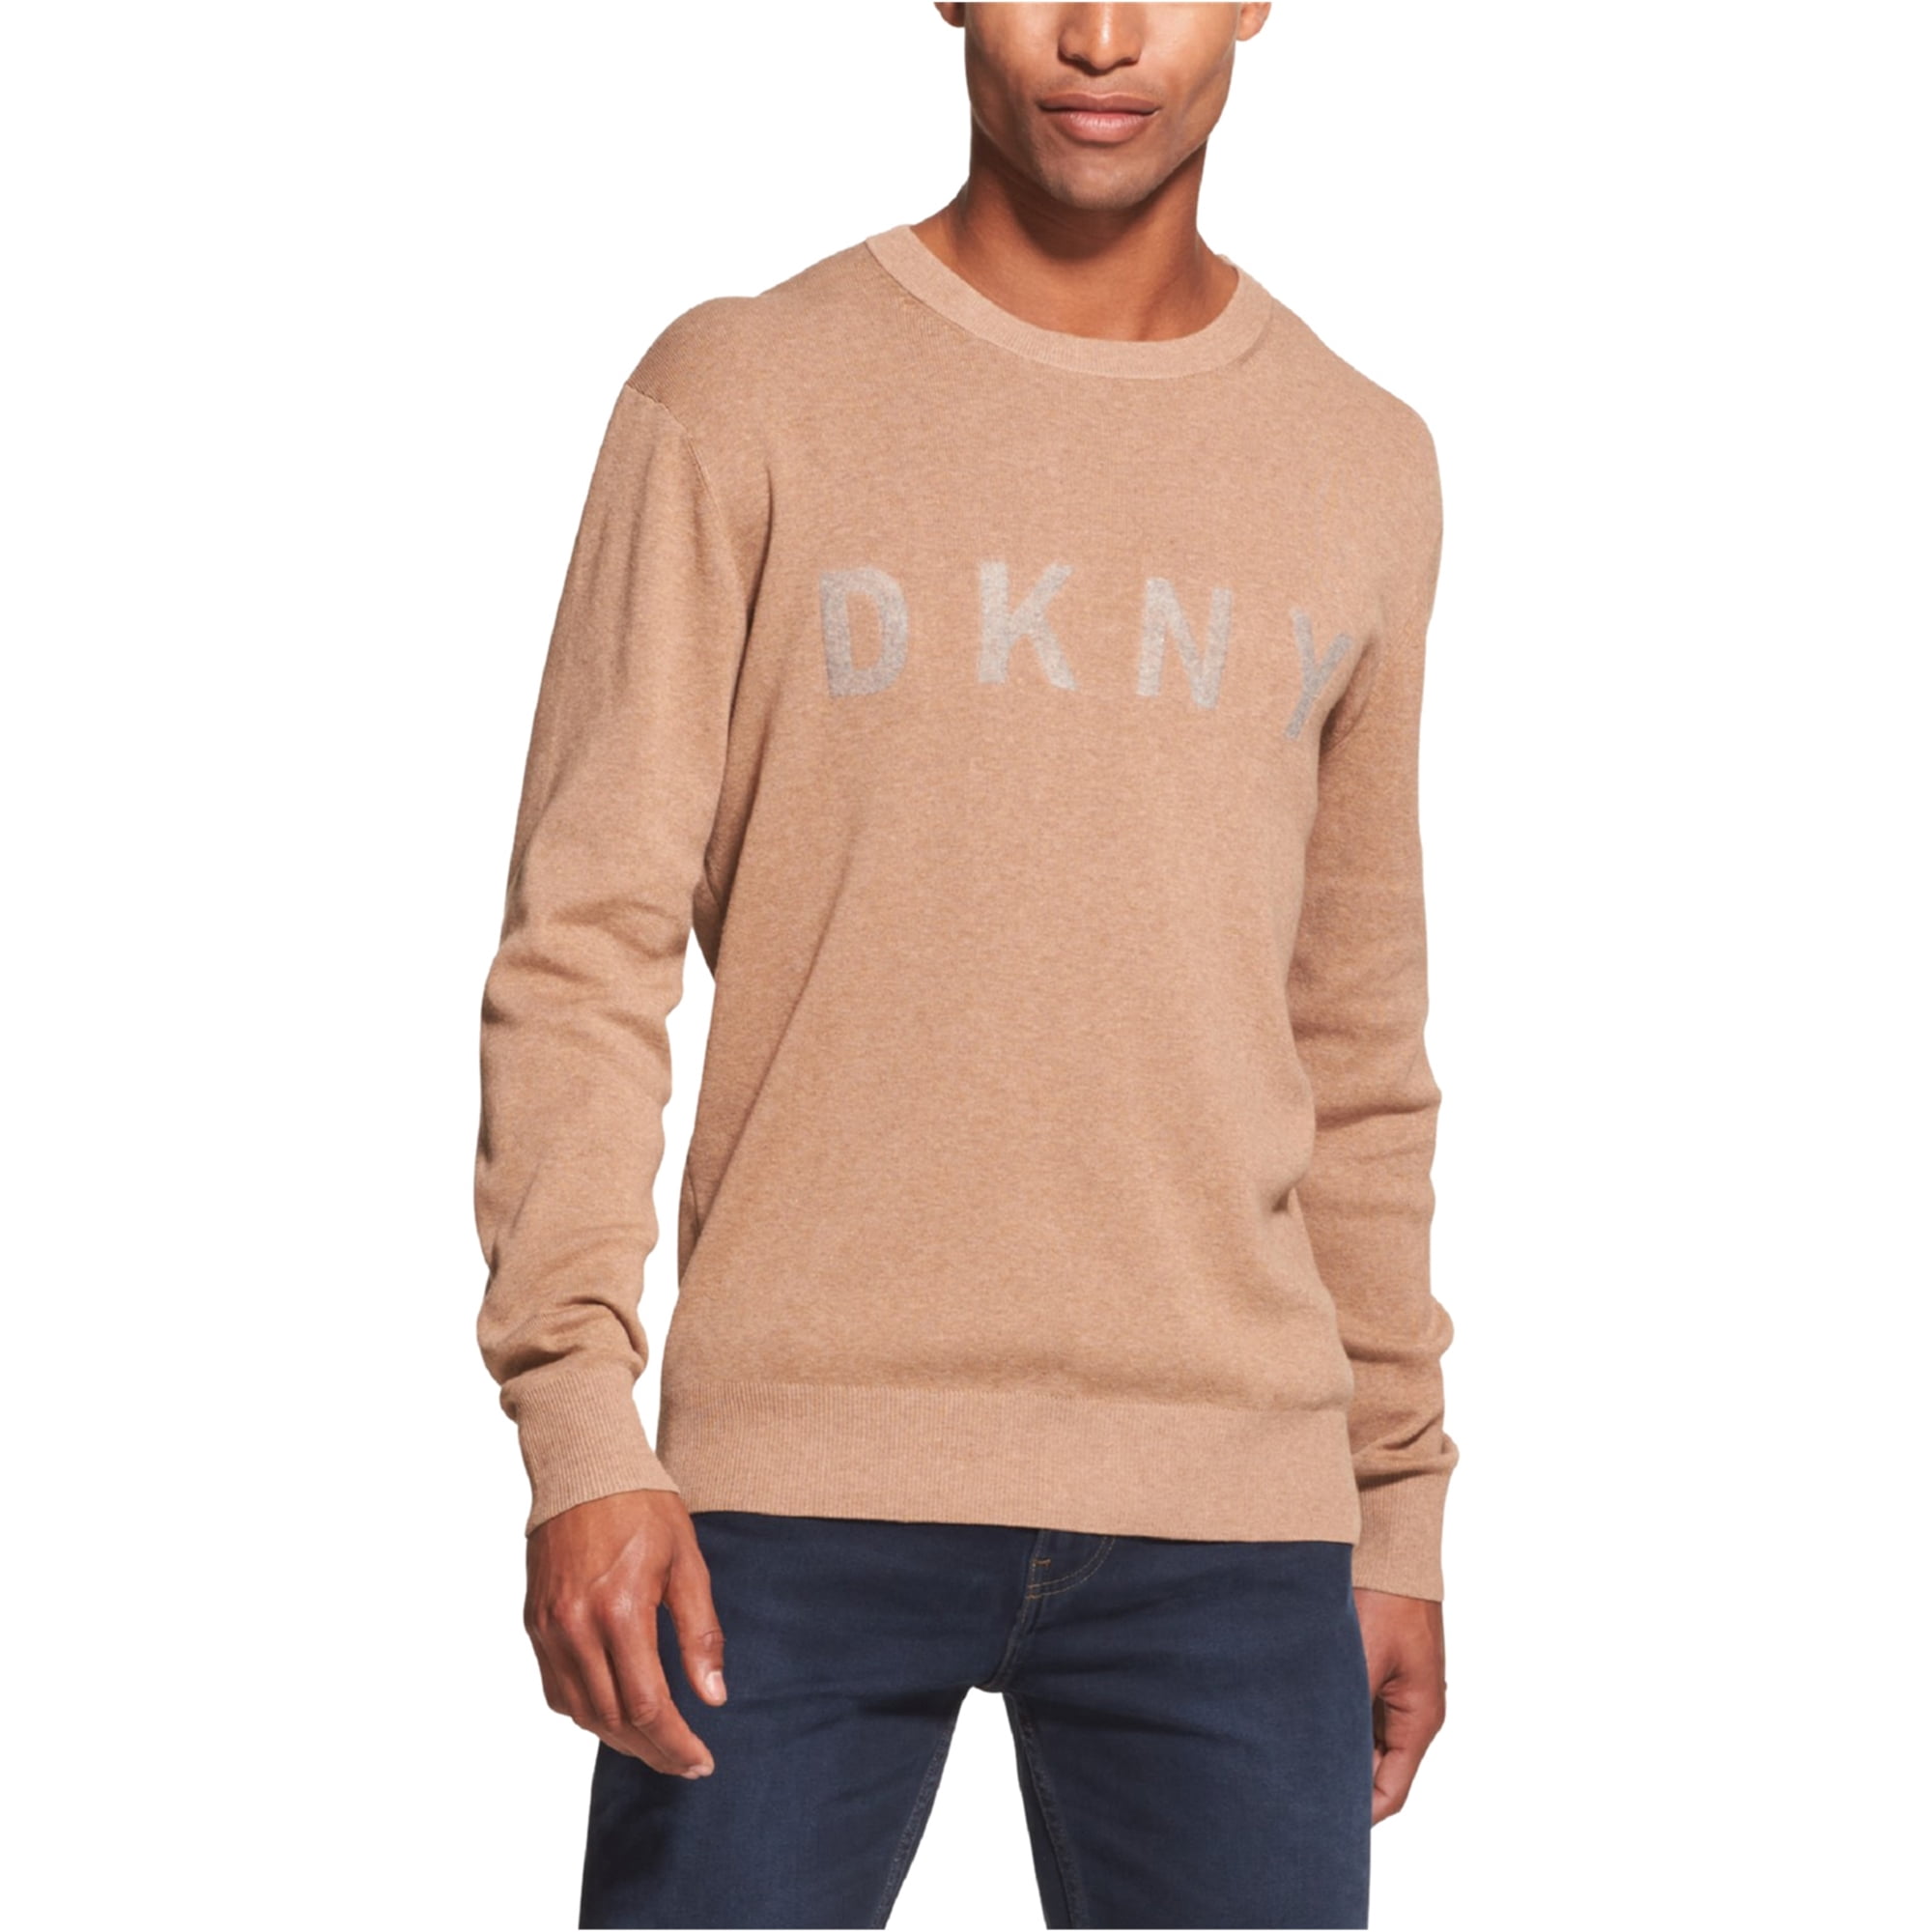 DKNY - Dkny Mens Logo Crew-Neck Knit Sweater - Walmart.com - Walmart.com